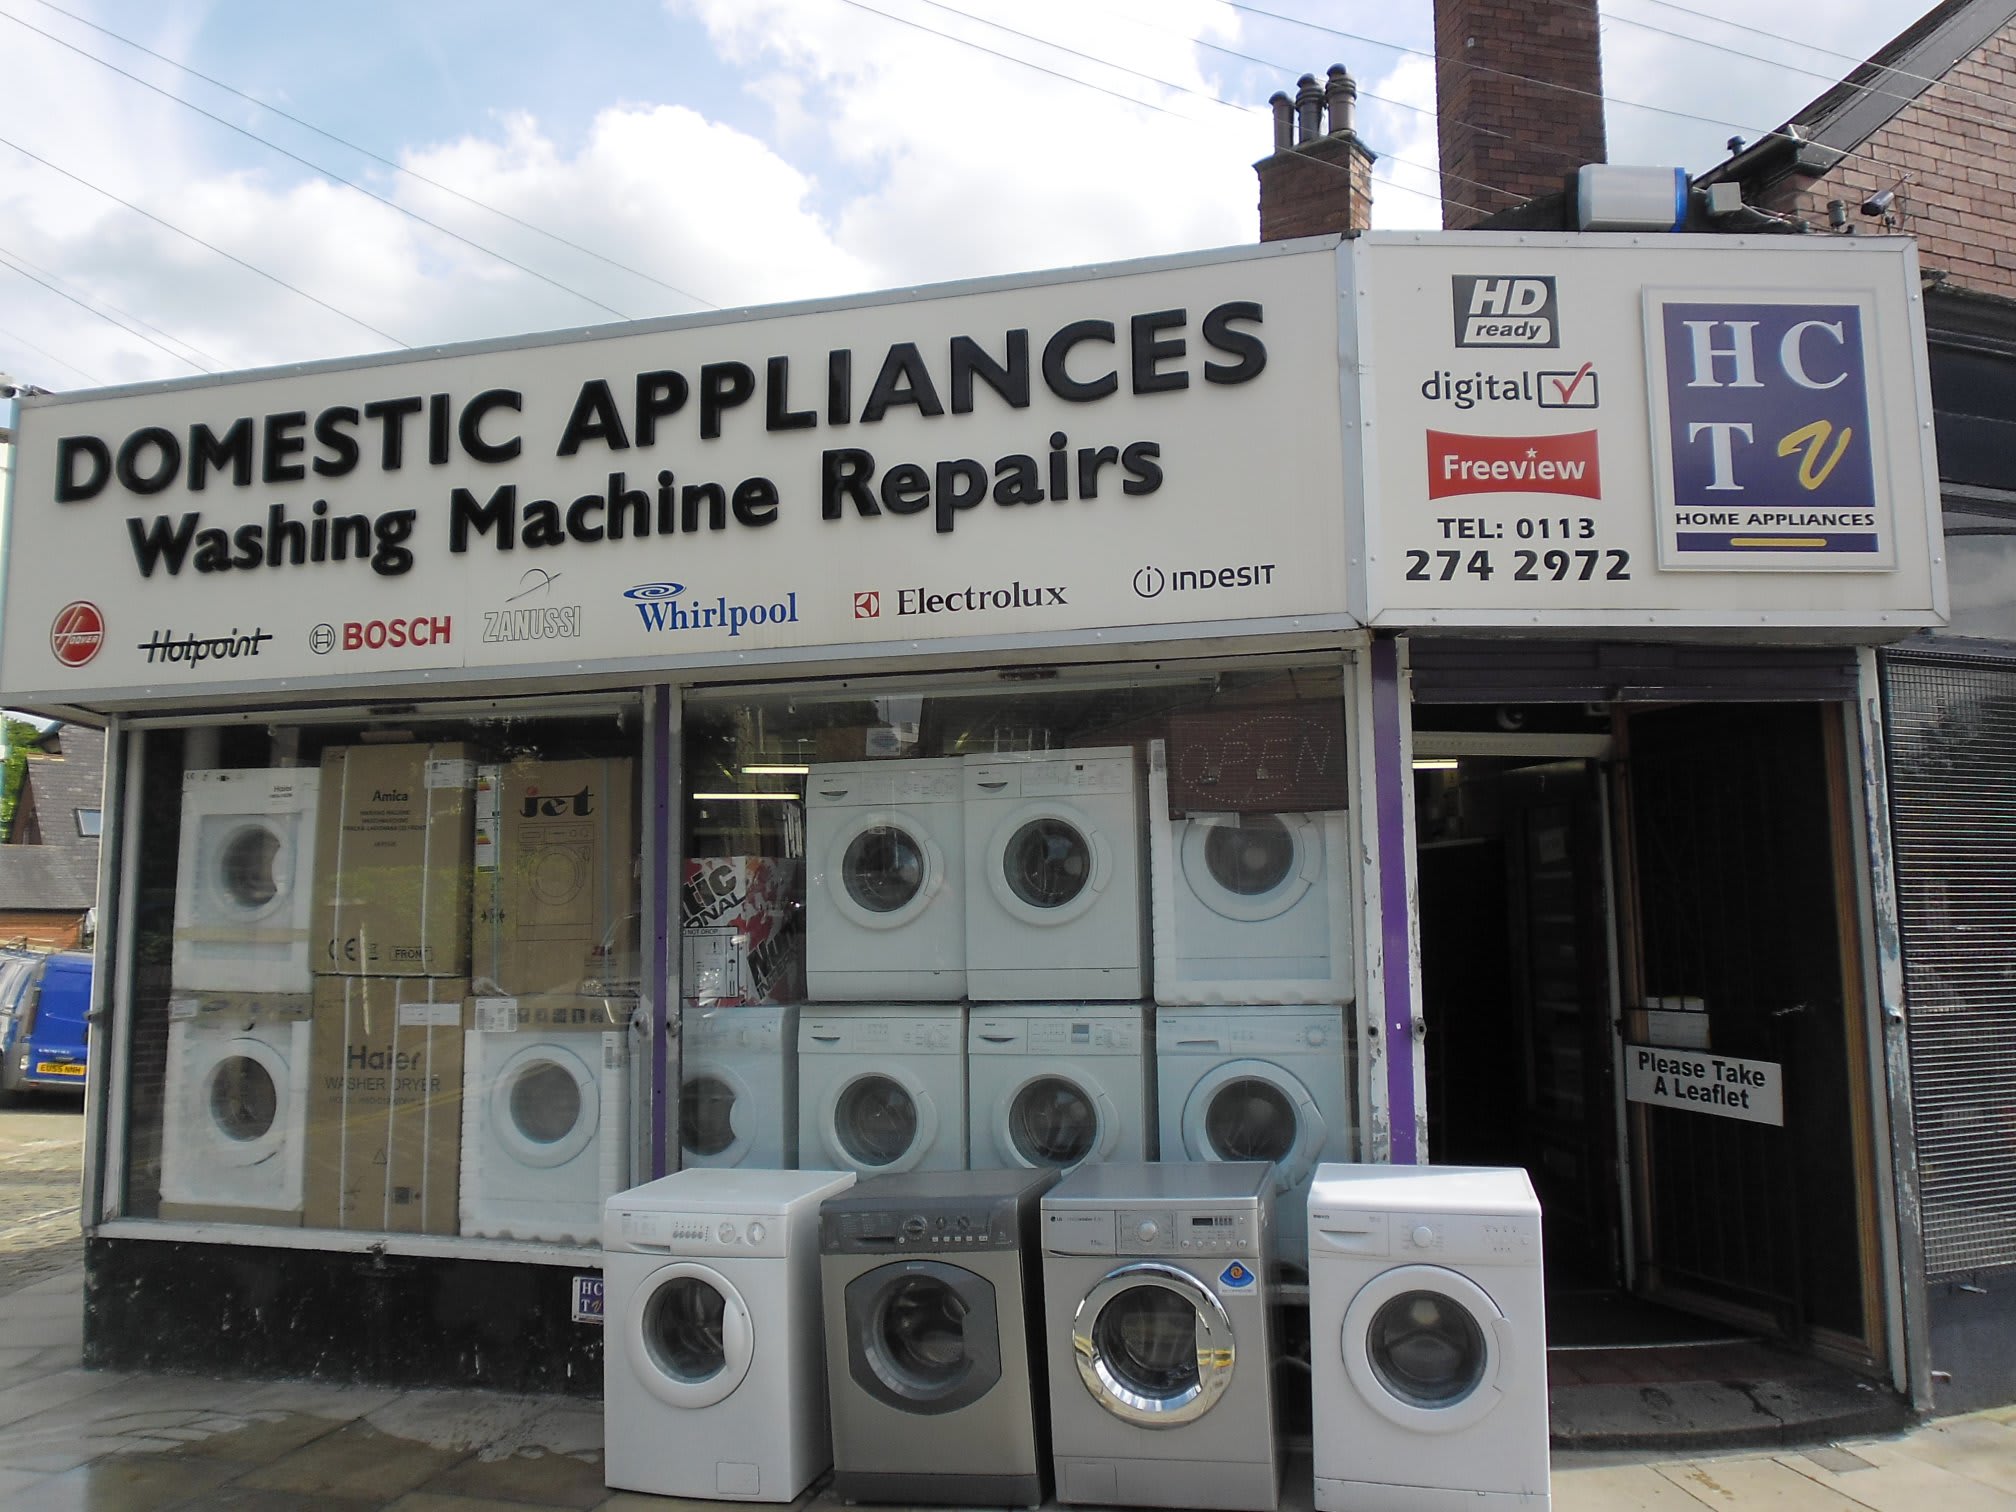 Headingley Home Appliances Ltd Leeds 01132 742972